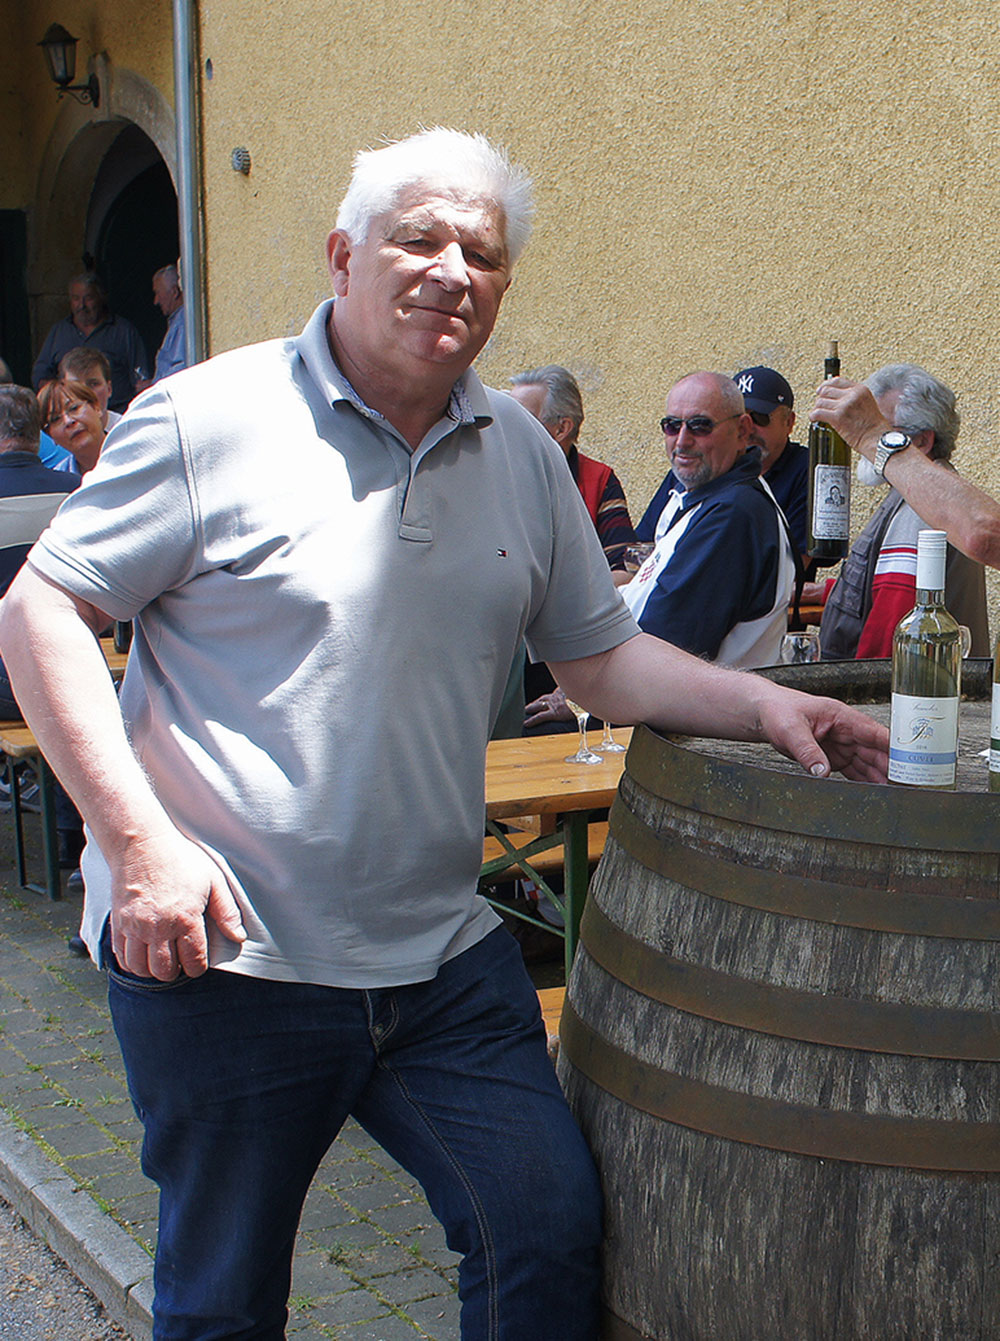 Marijan ganjer, predsjednik Samoborske vinogradarsko vinarske udruge, govori u aktualnostima kod samoborskih vinogradara